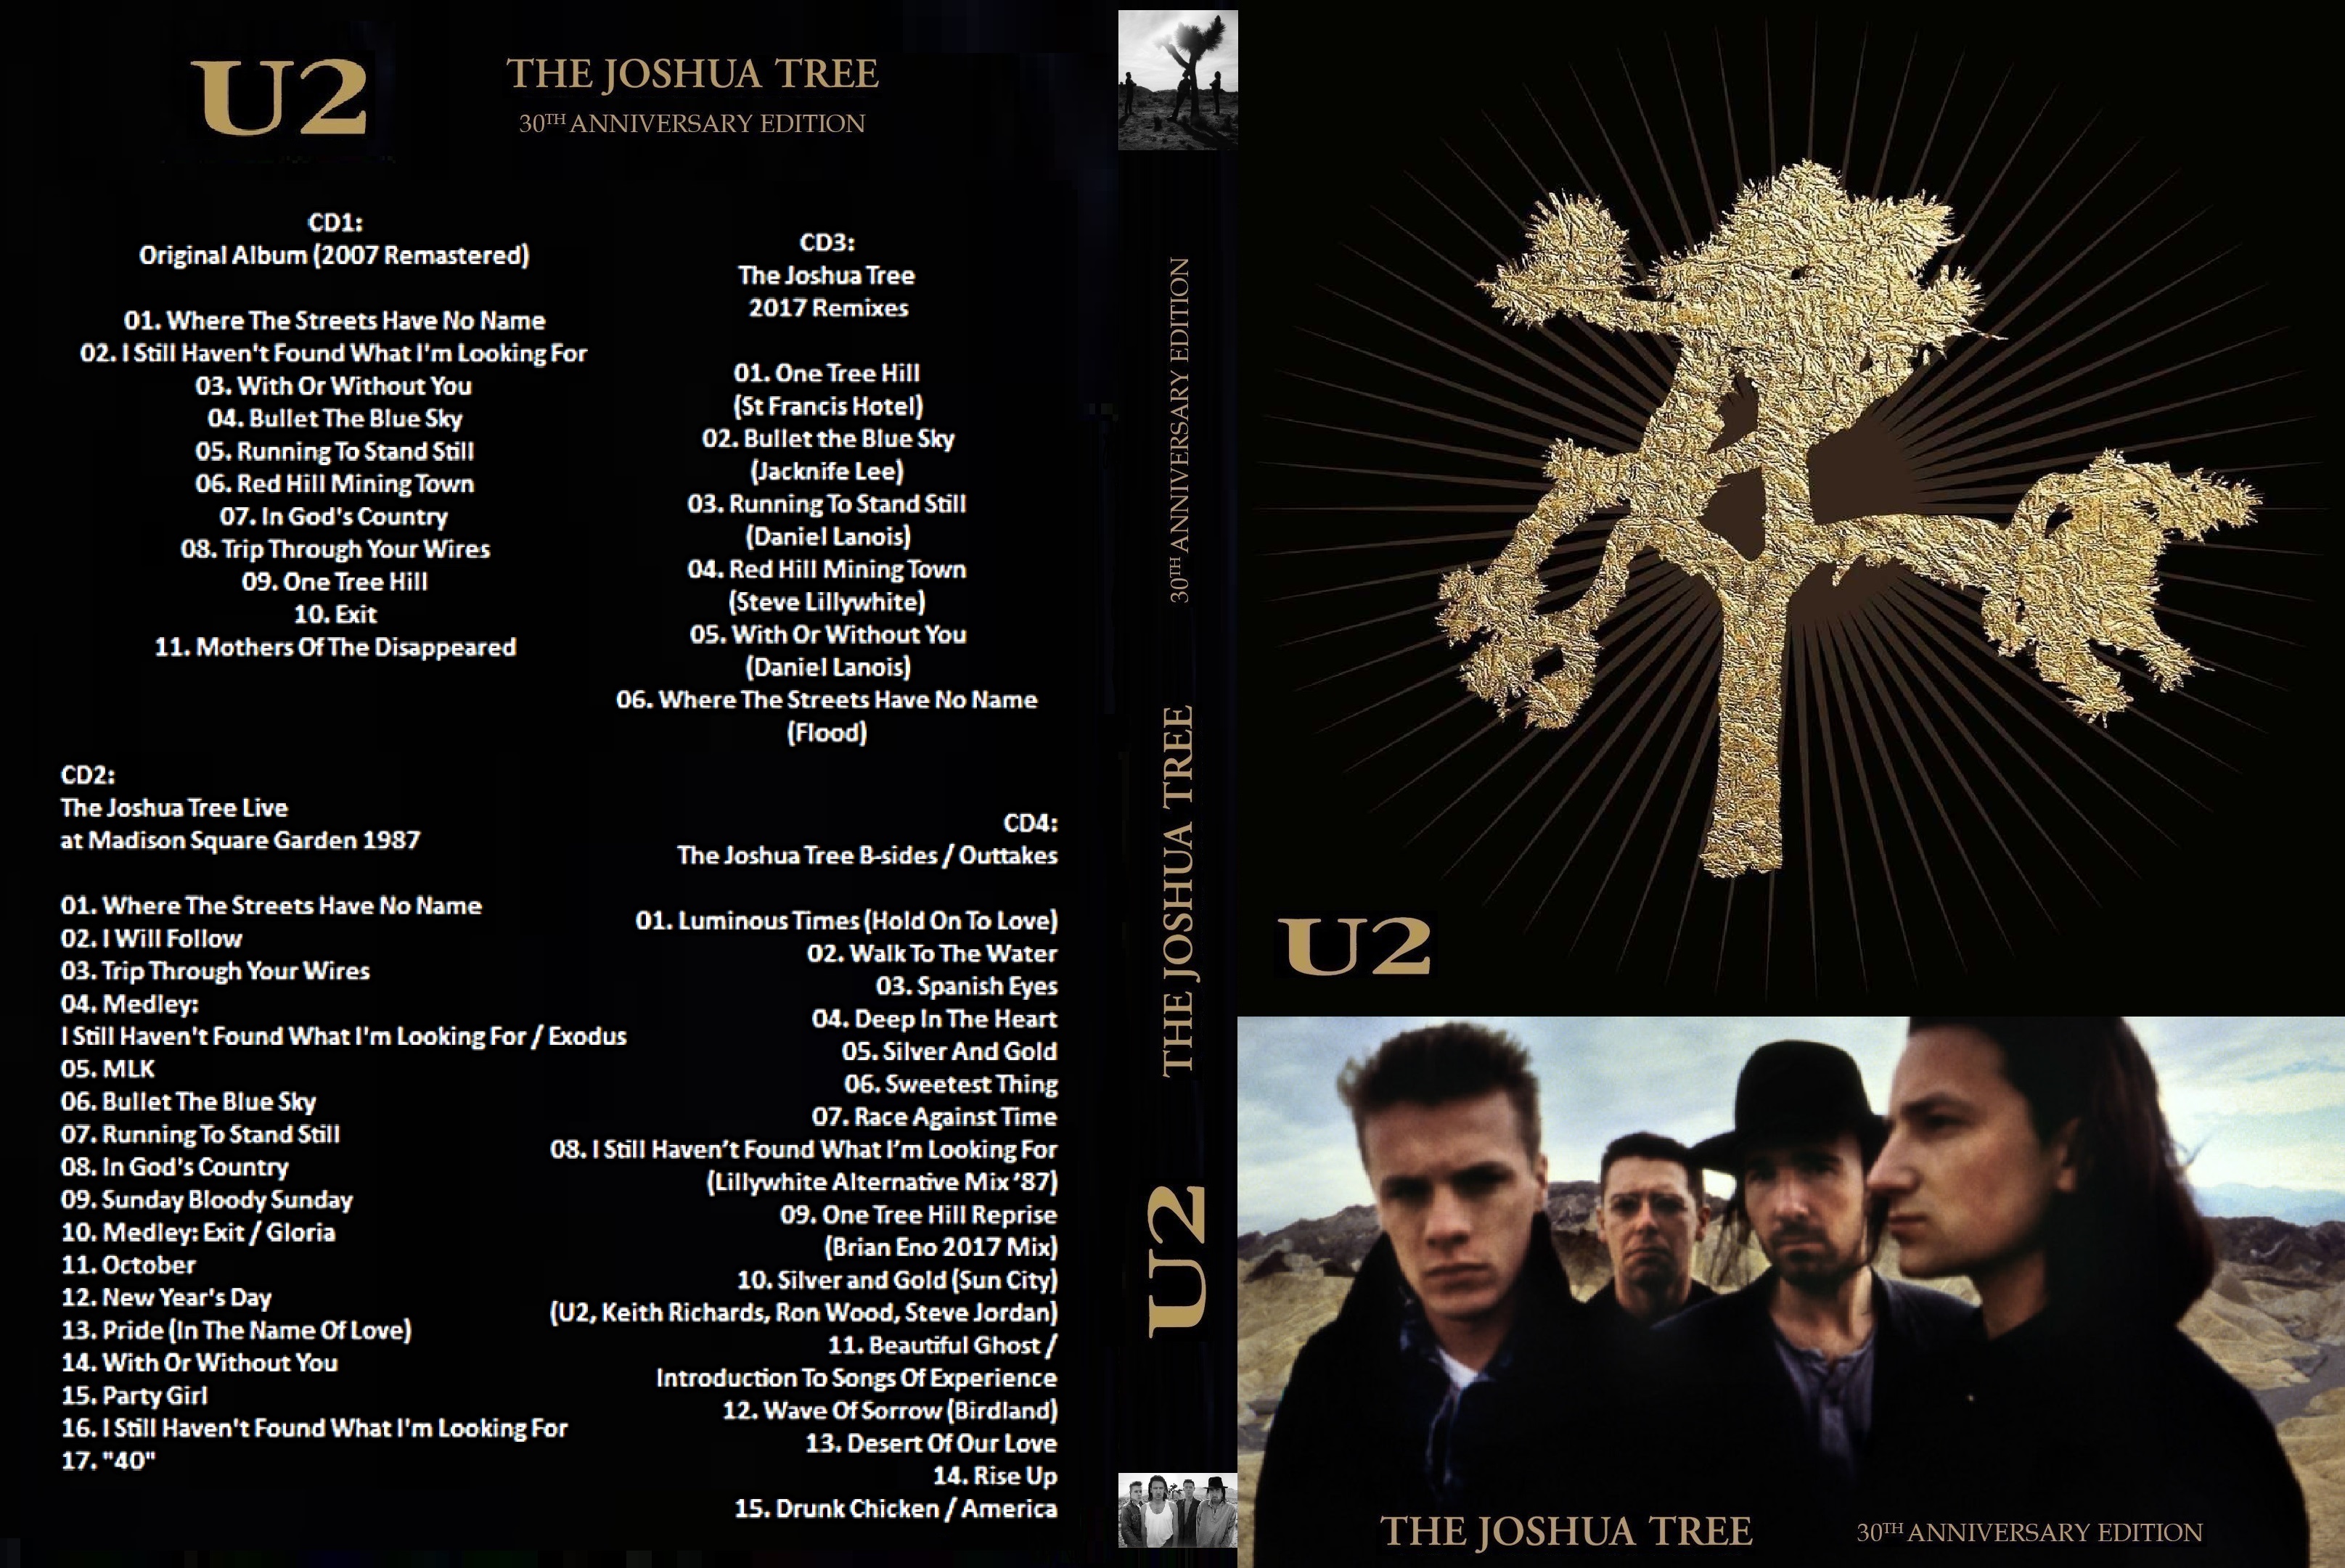 Jaquette DVD U2 - The Joshua Tree - Edition 30eme Anniversaire